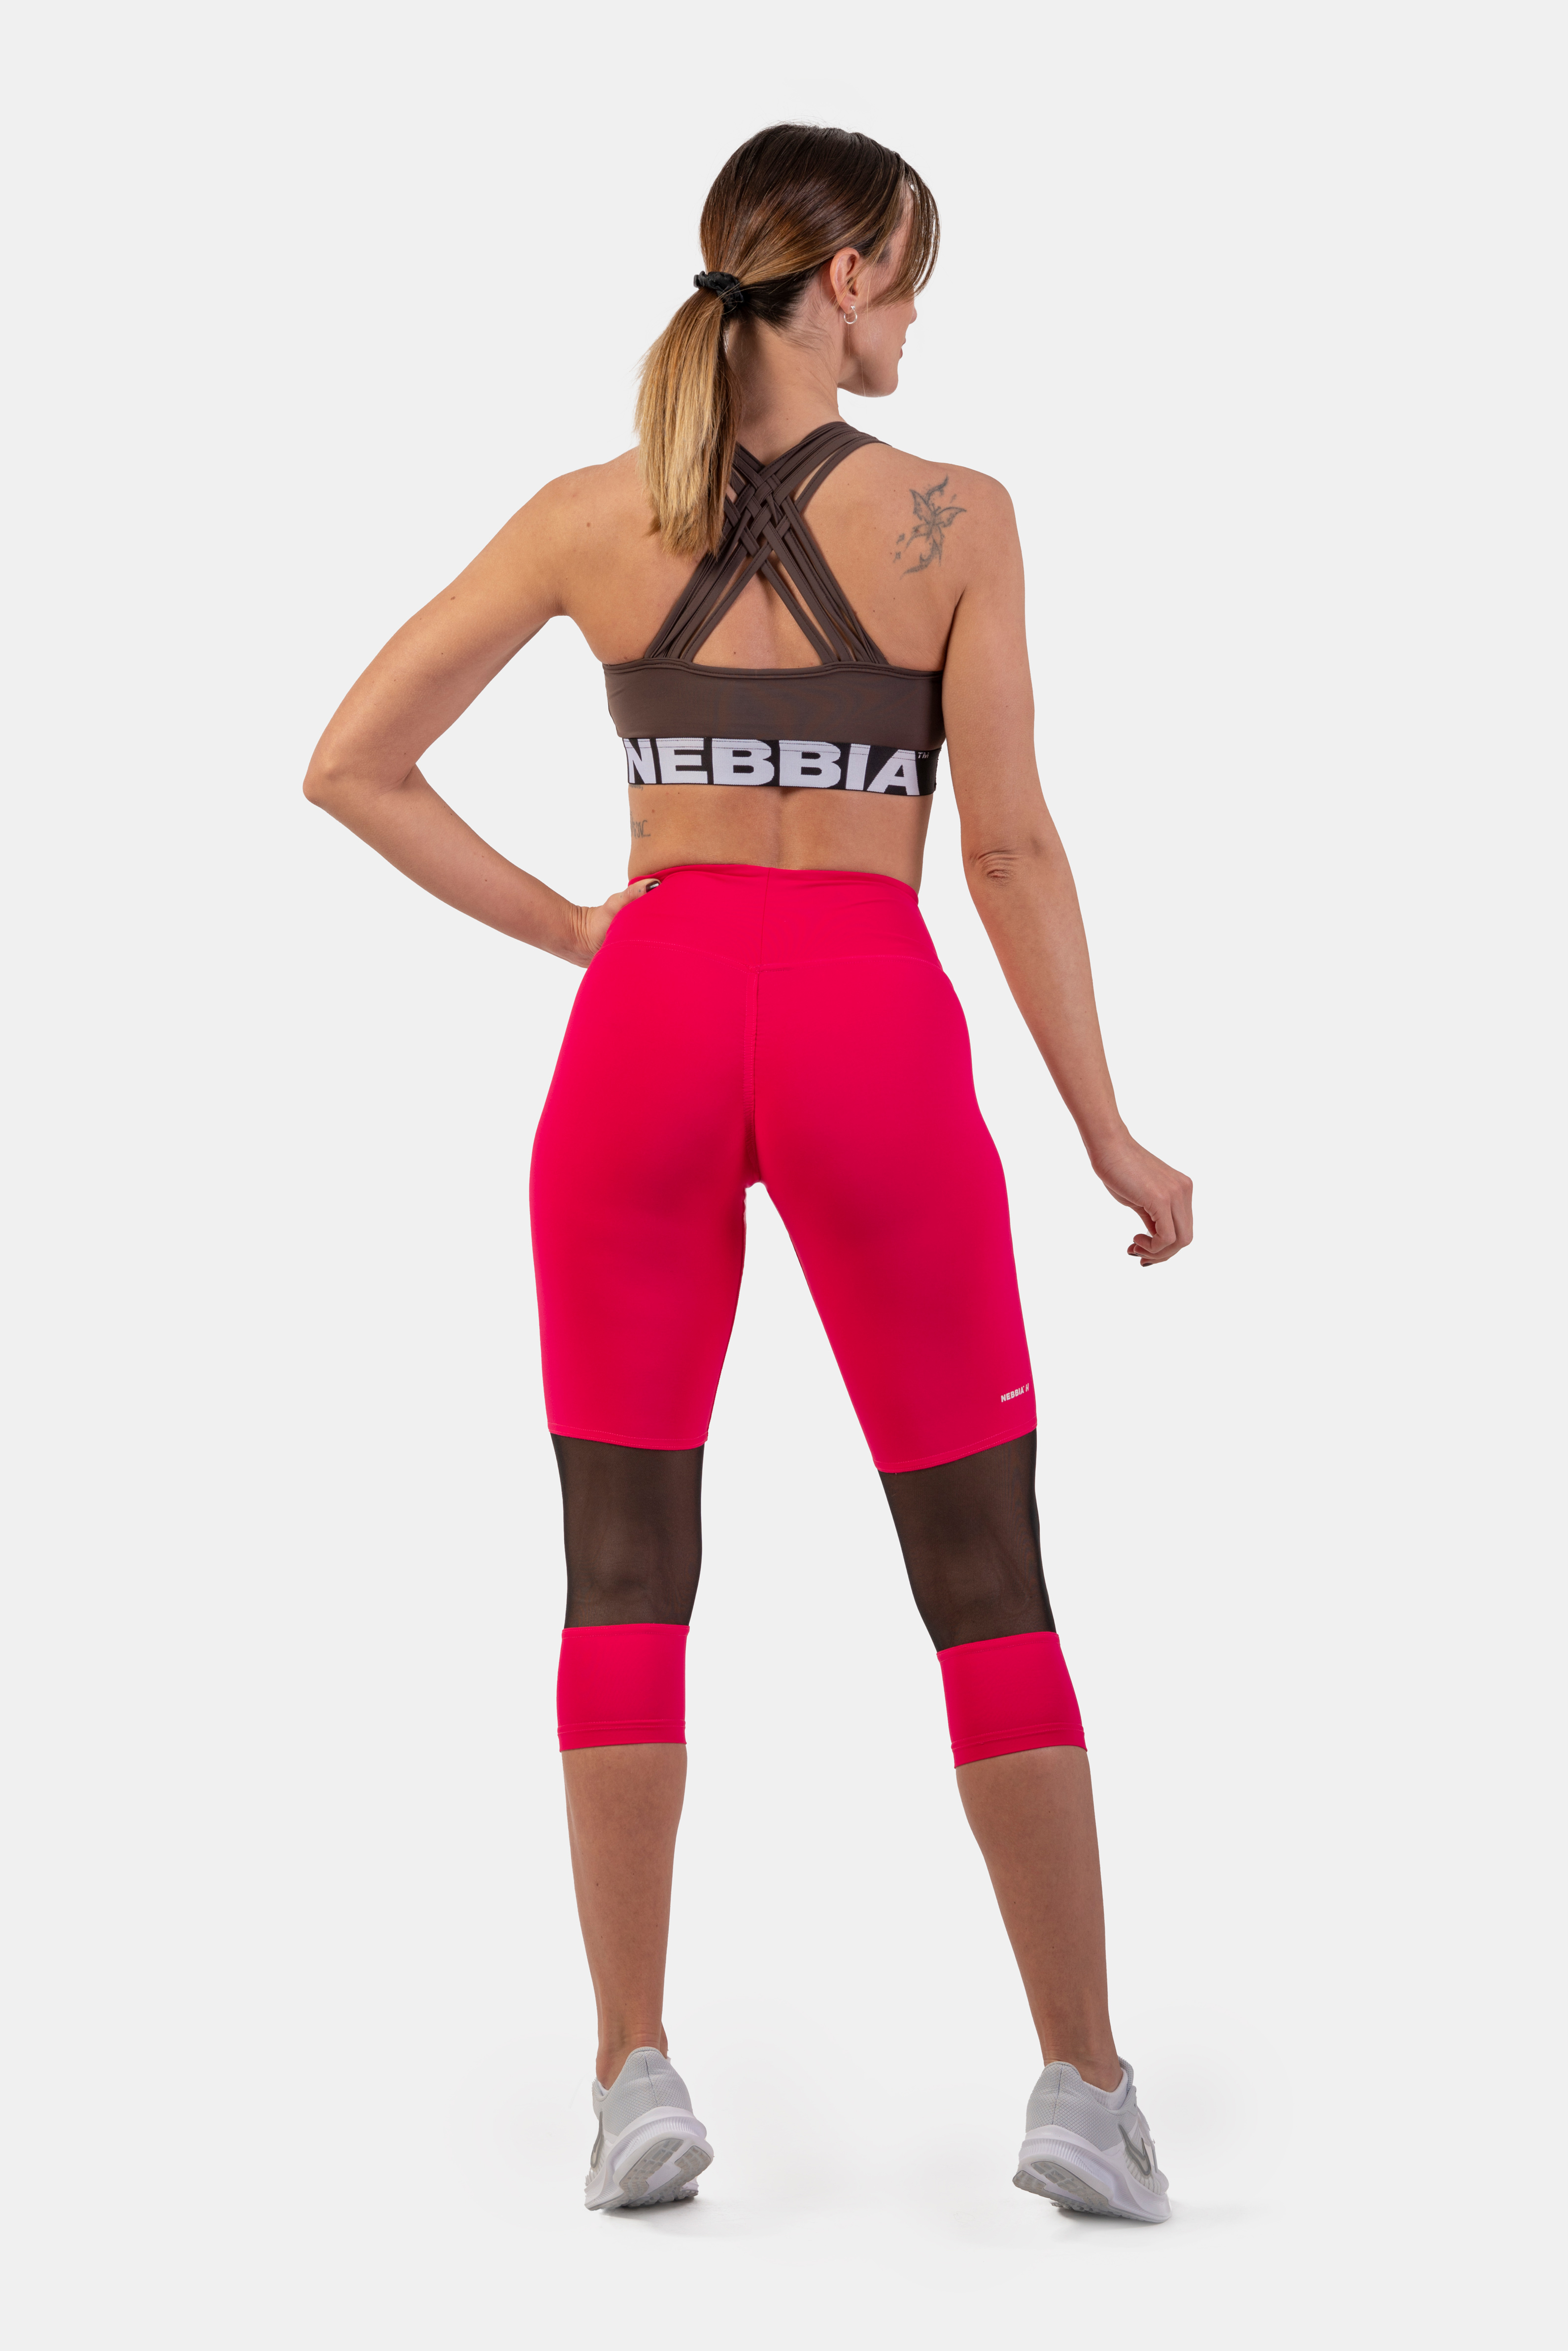 NEBBIA 3/4 high-waisted sports leggings